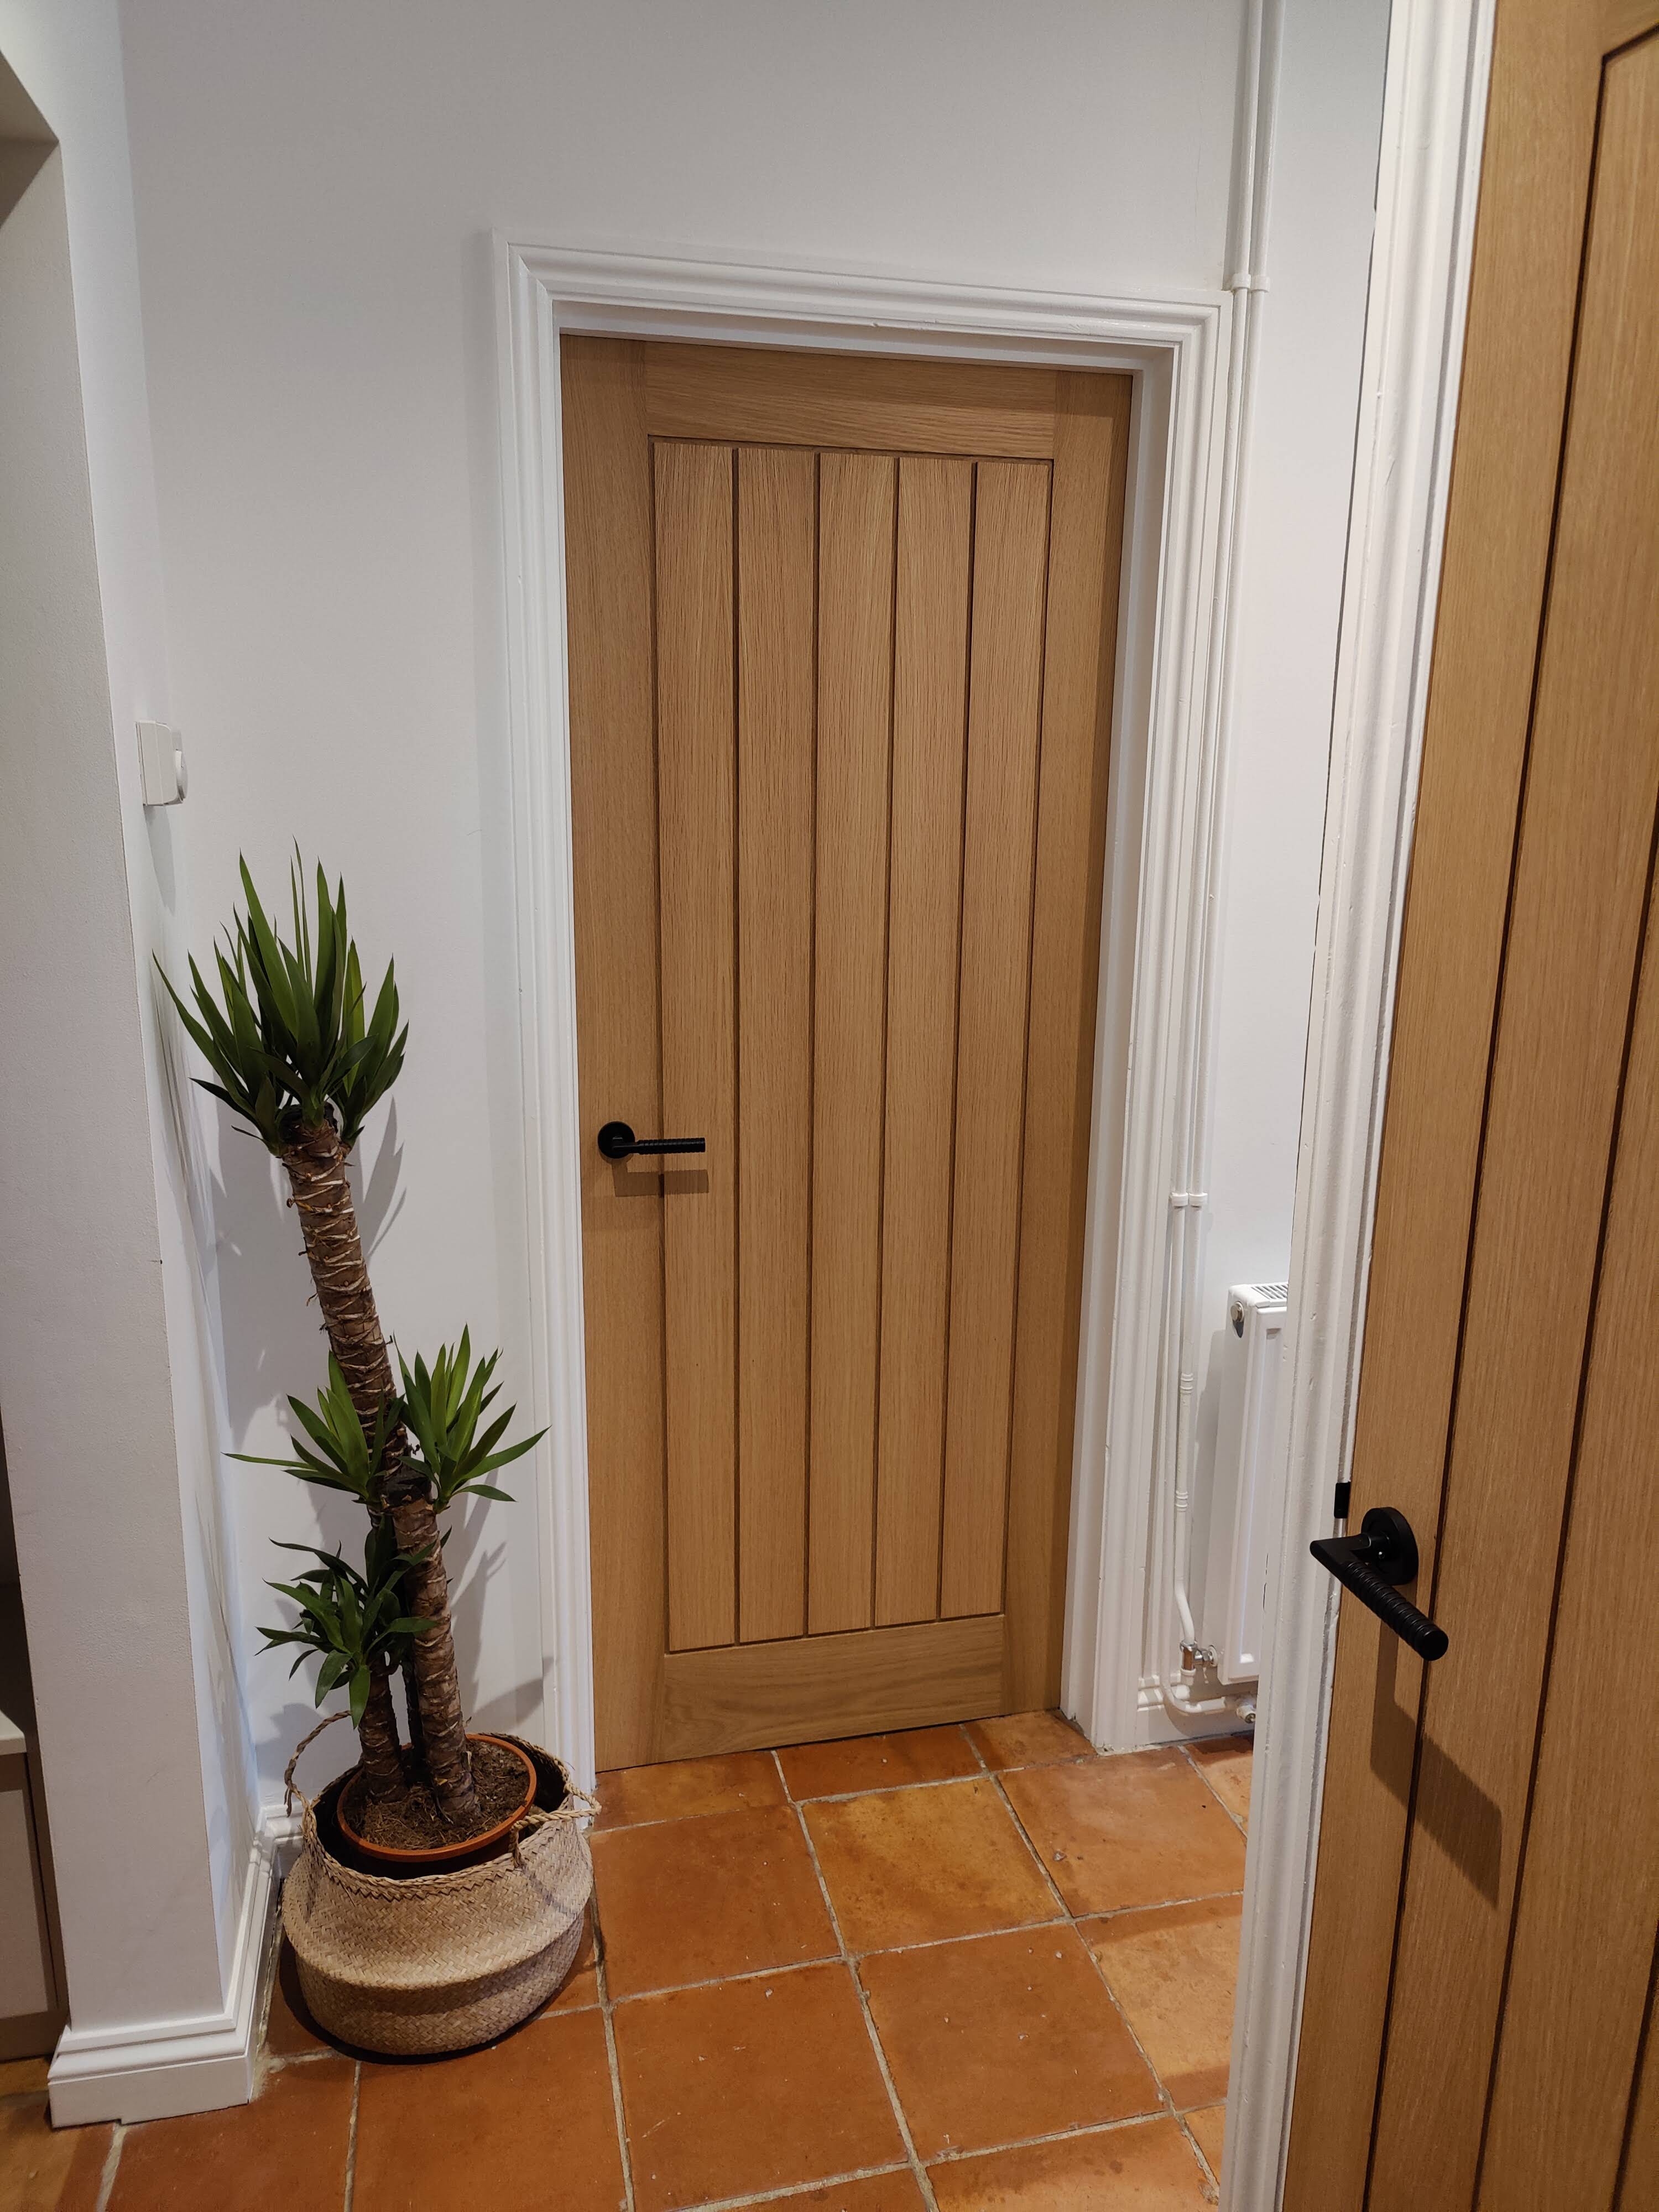 Oak veneer doors hung